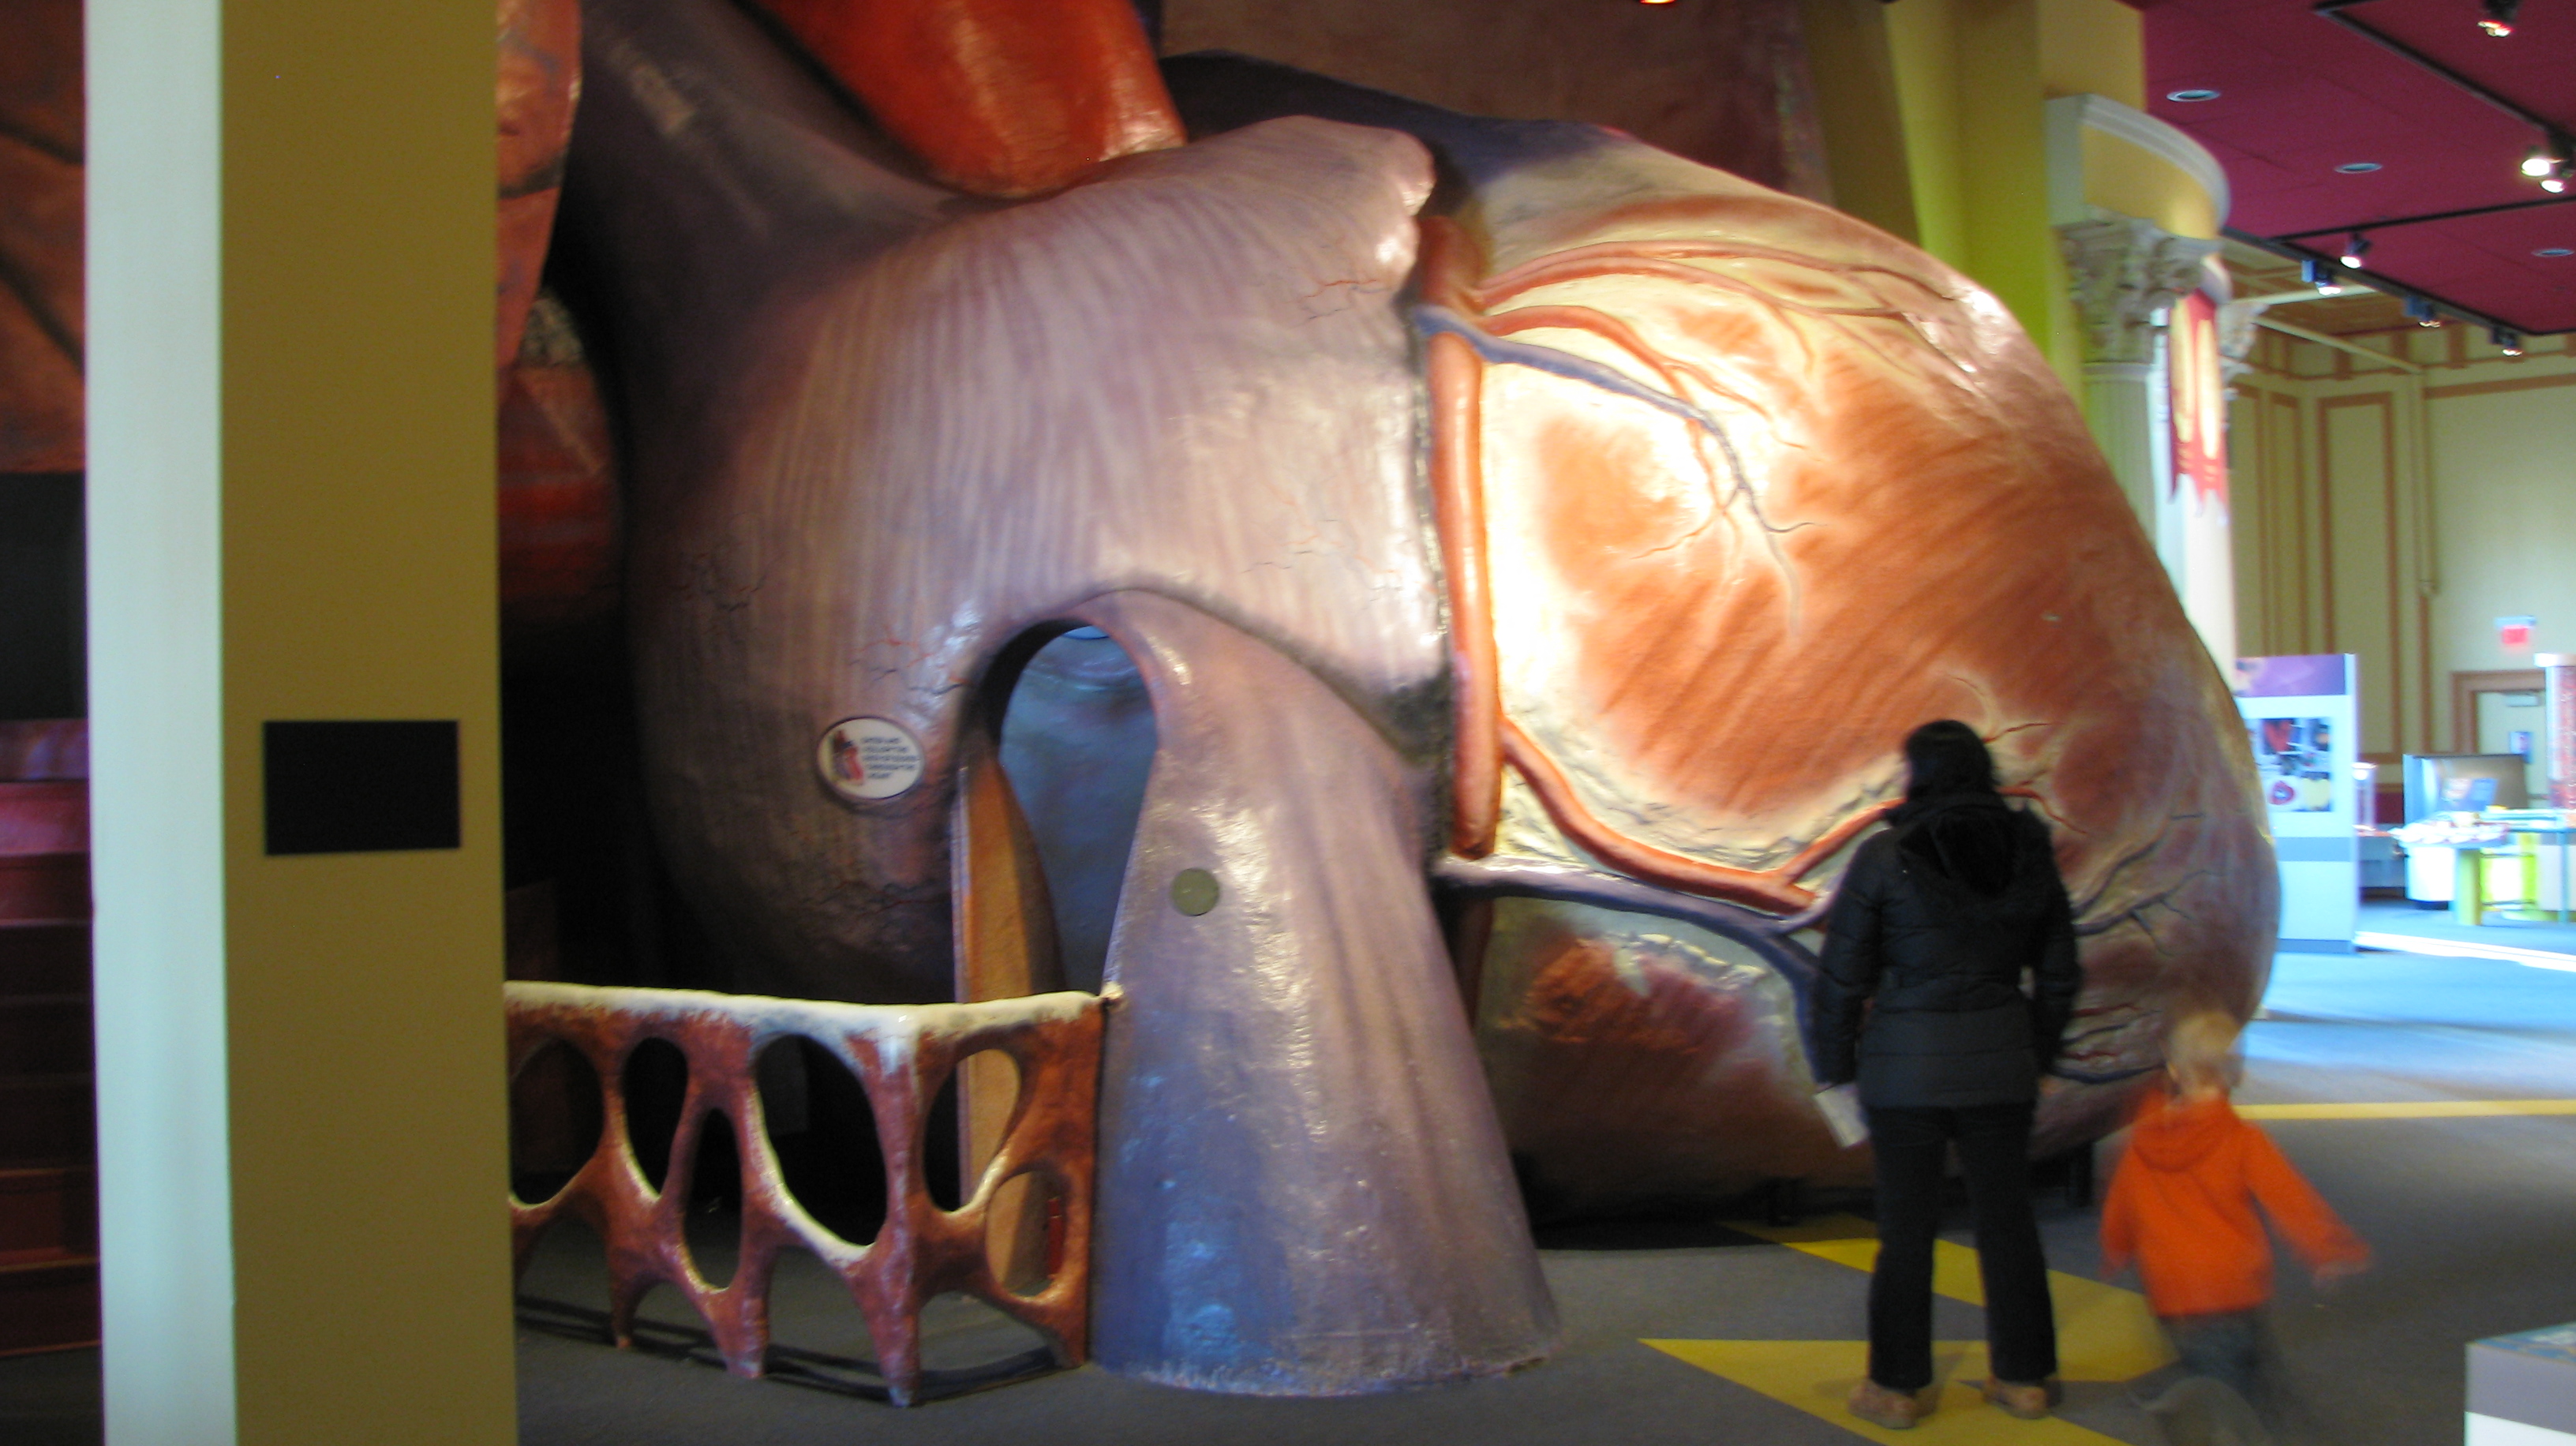 Сердце синего кита весит семьсот килограммов. Размер сердца синего кита.